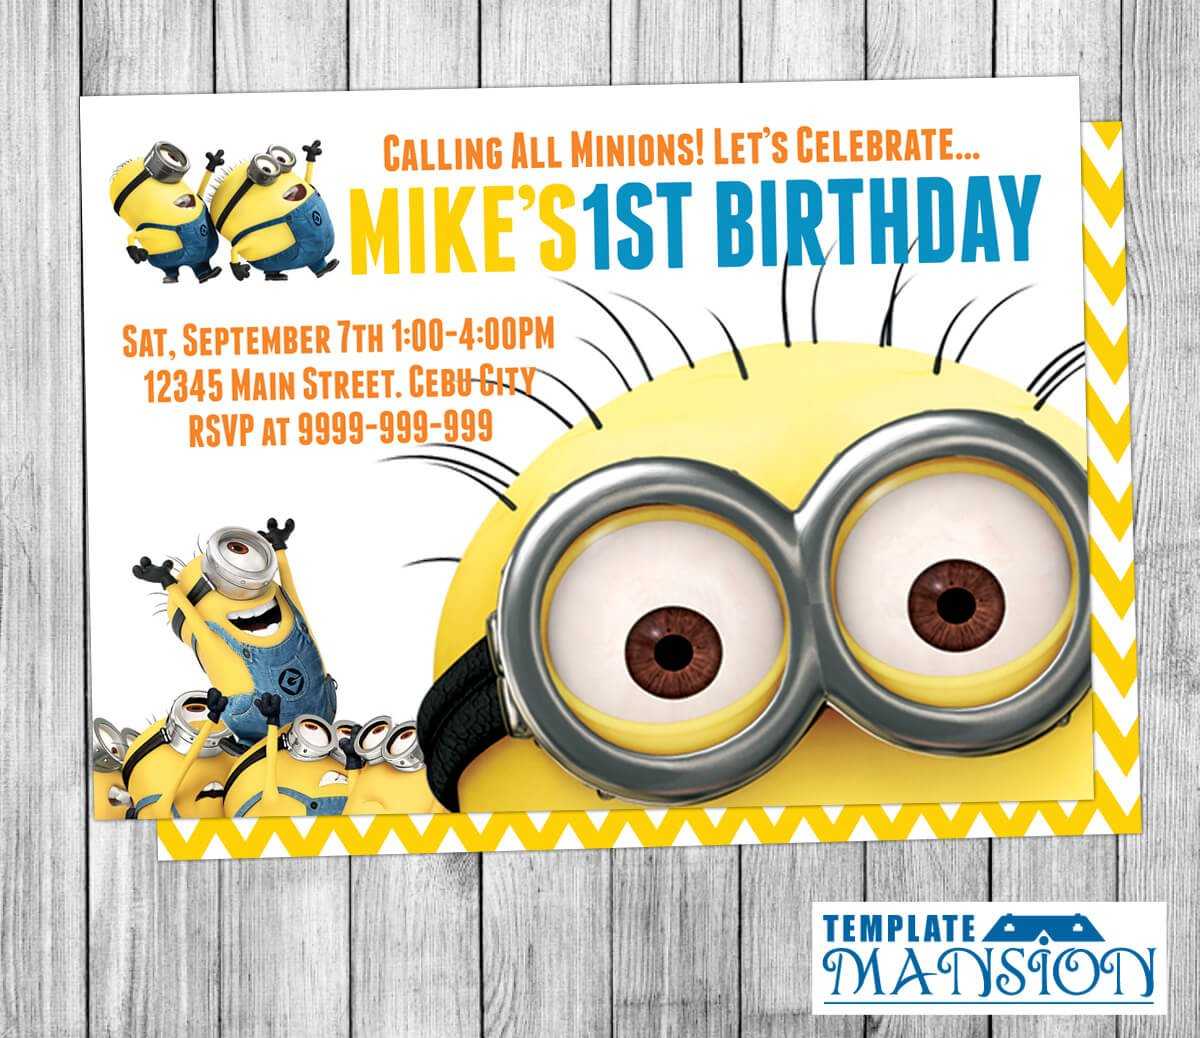 Minion Birthday Invitations : Minion Birthday Invitations Pertaining To Minion Card Template